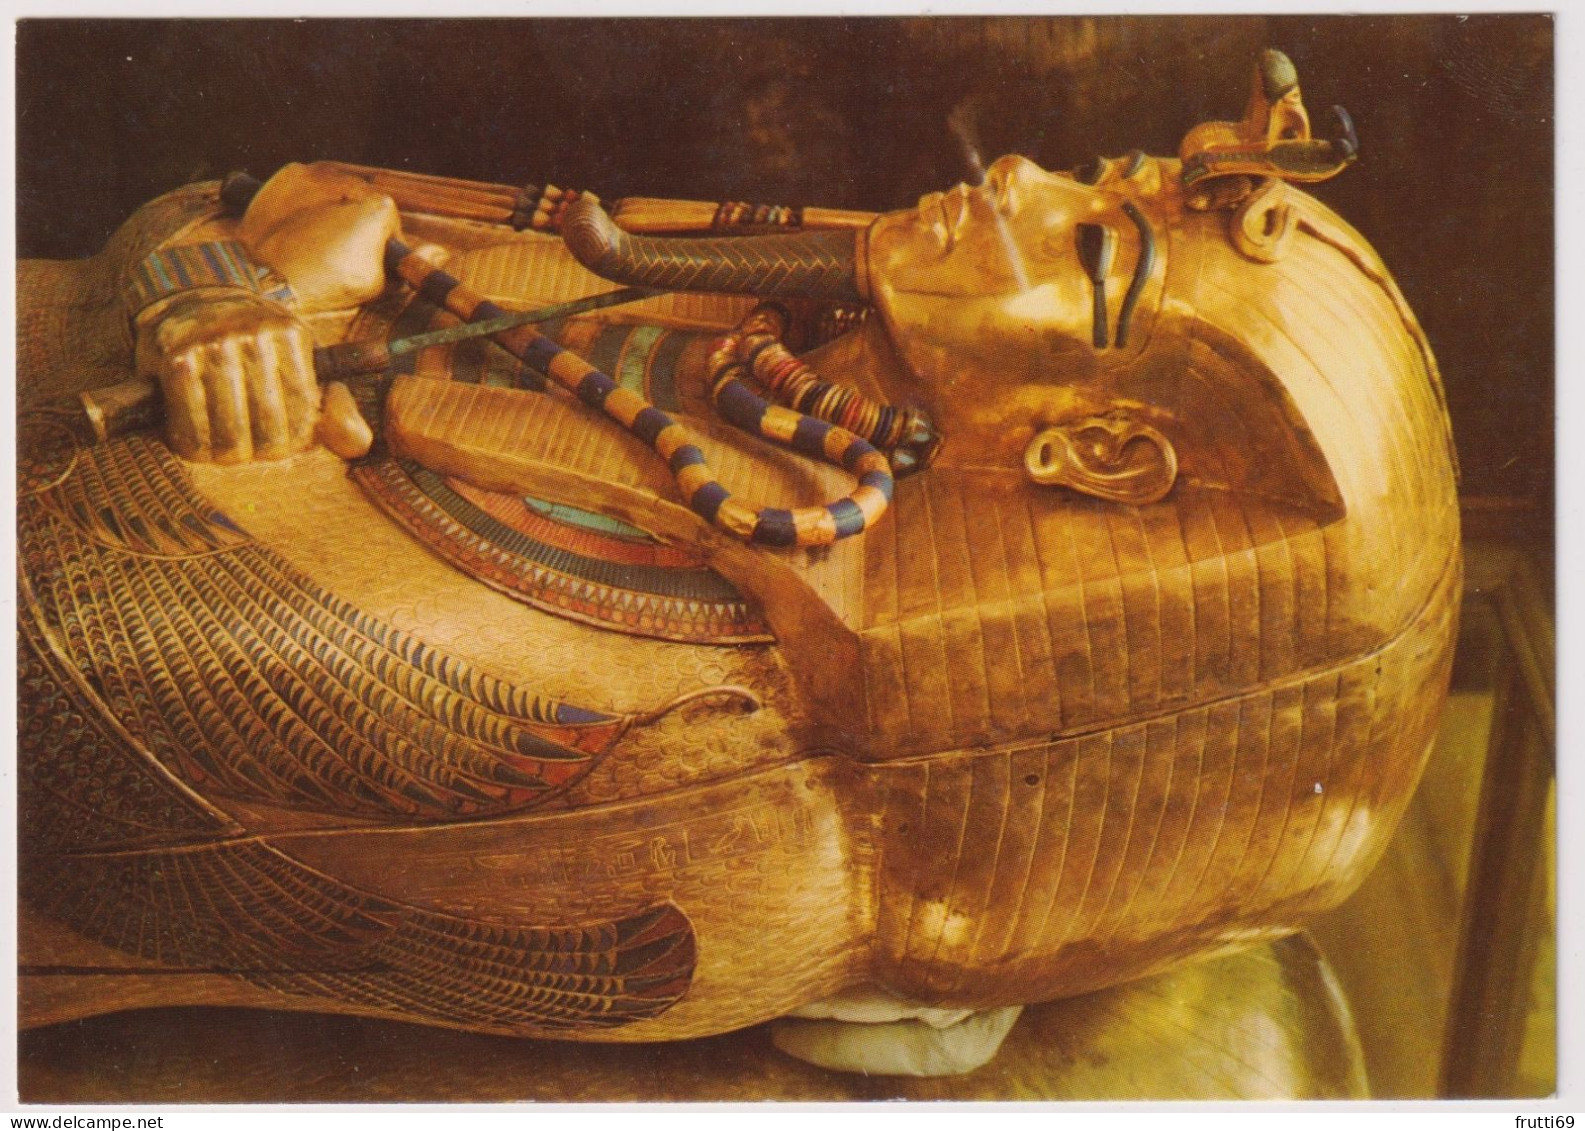 AK 198144 EGYPT - Cairo - Cairo Egyptian Museum - Tut Ankh Amun's Treasures - Second Coffin - Musées